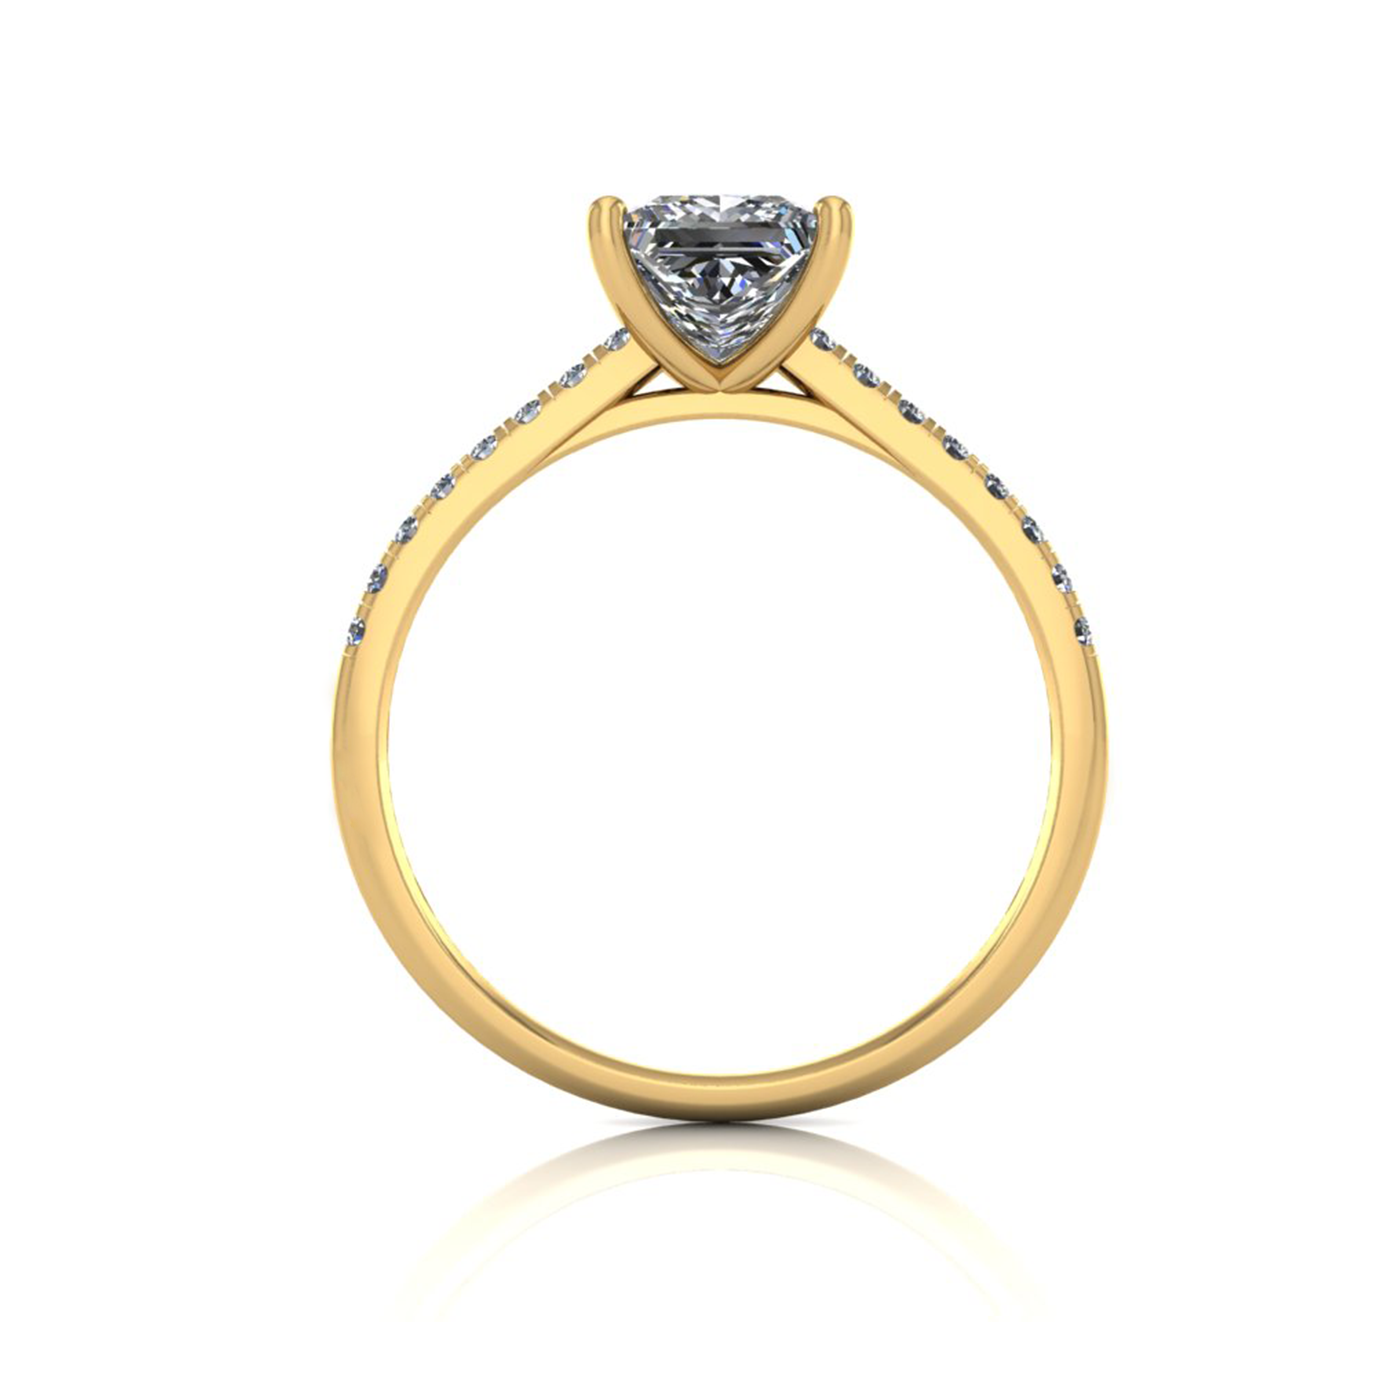 18k yellow gold 1,00 ct 4 prongs princess cut diamond engagement ring with whisper thin pavÉ set band